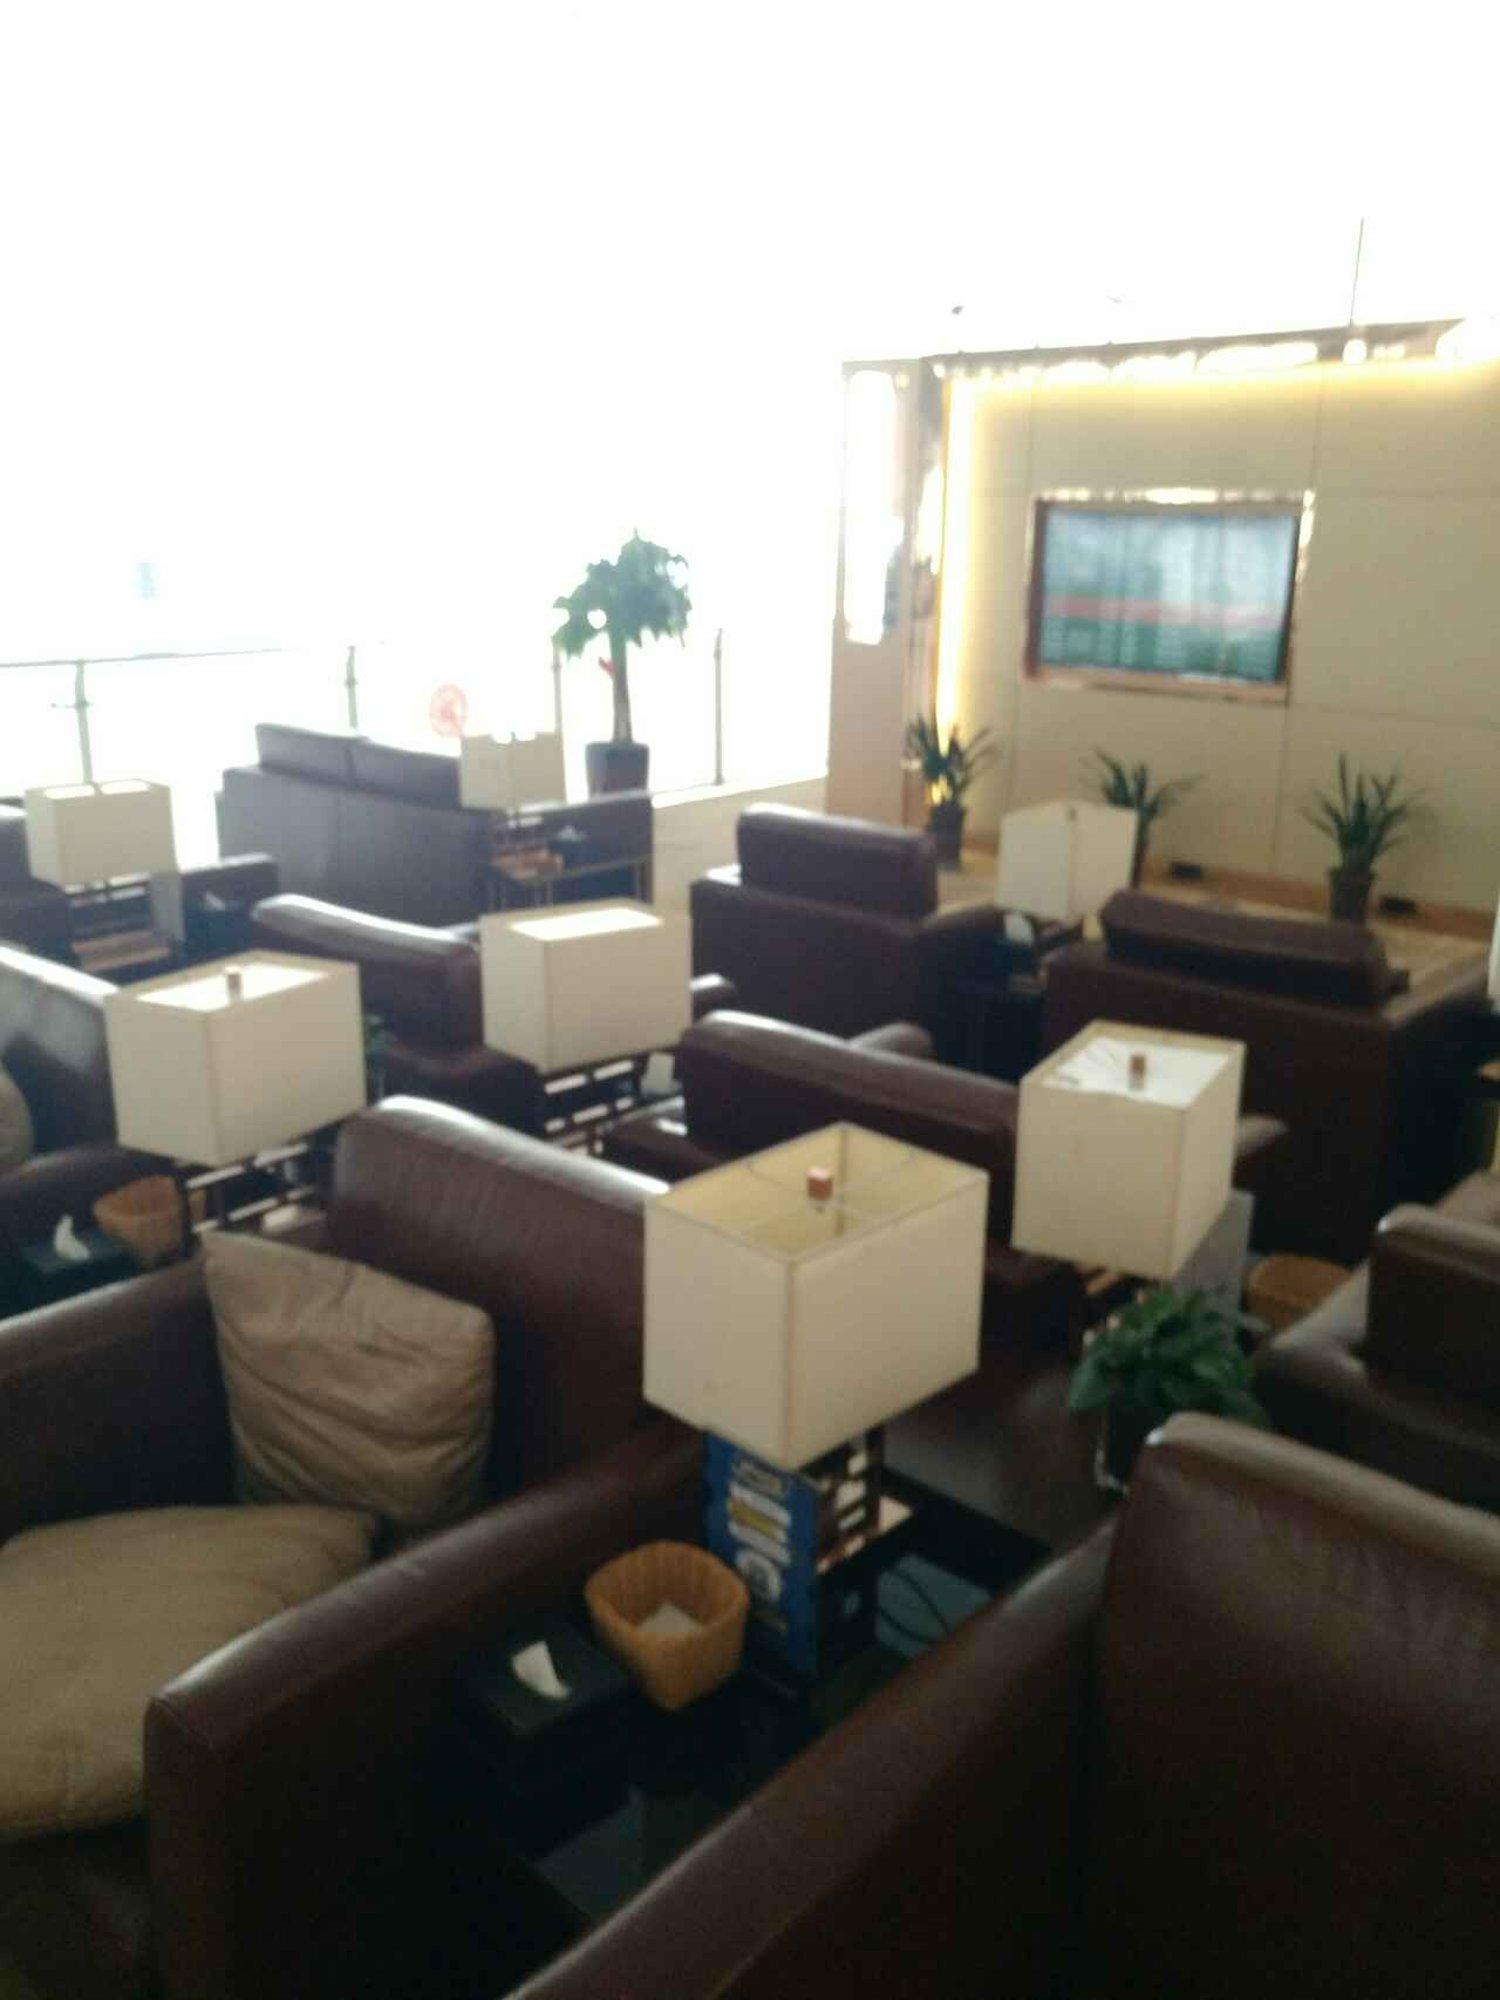 V2 Shenzhen Airlines King Lounge image 4 of 4